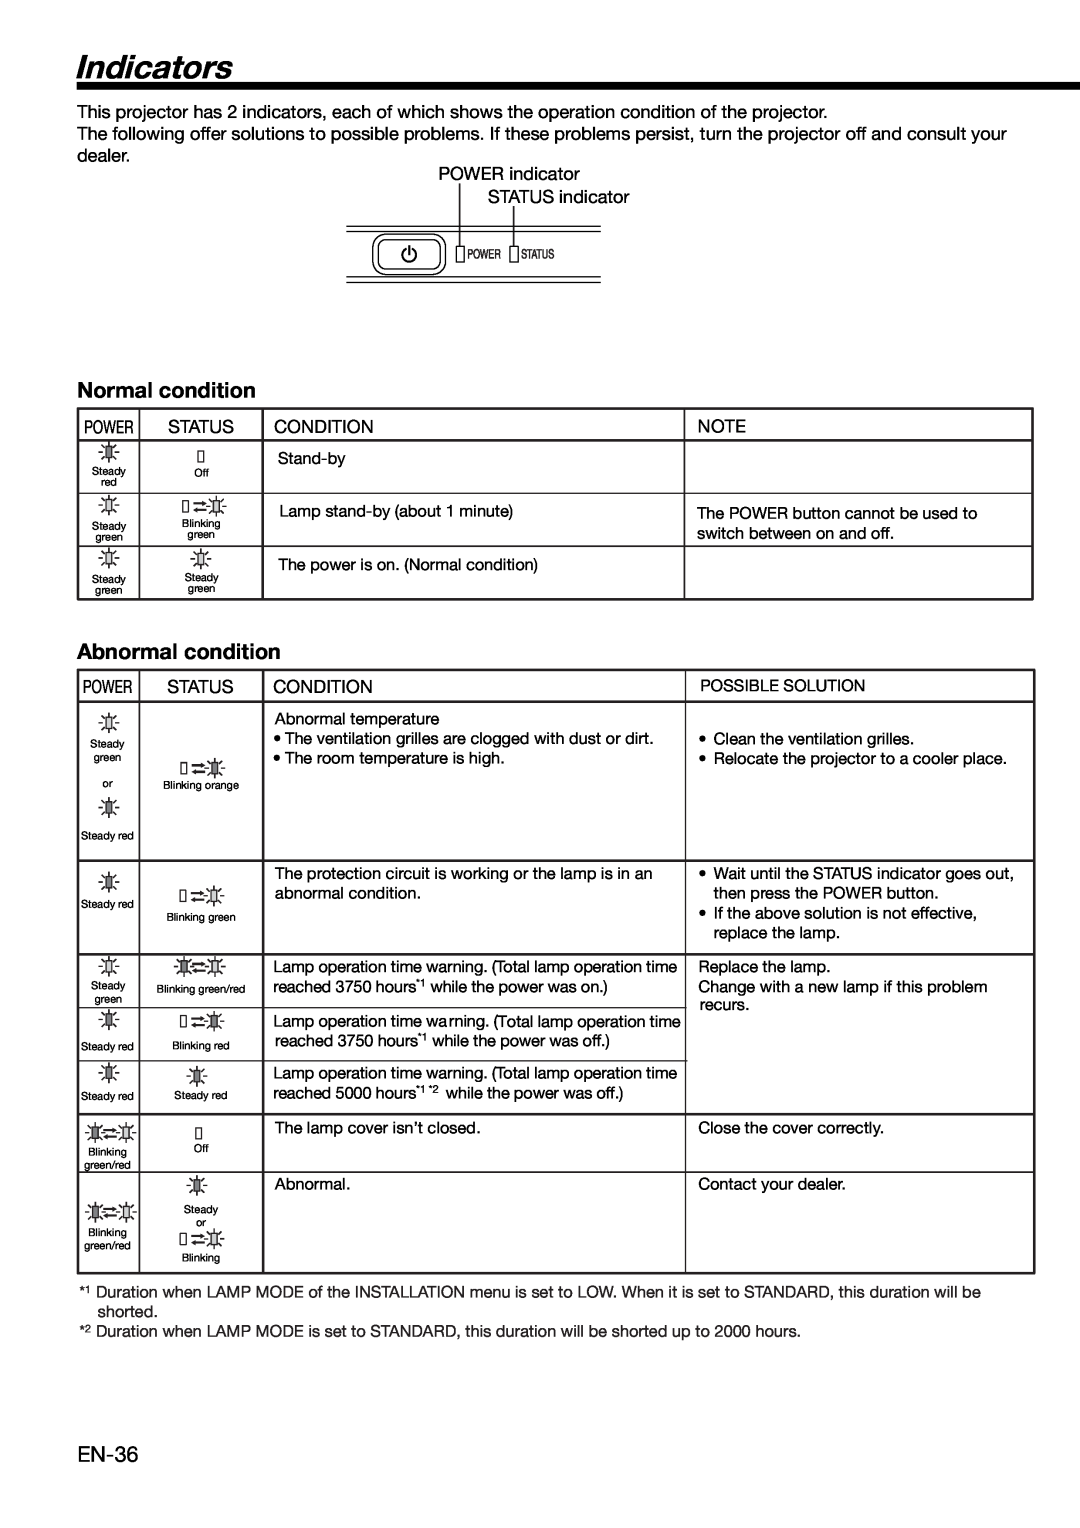 Mitsubishi Electronics XD490U user manual Indicators, Normal condition, Abnormal condition 